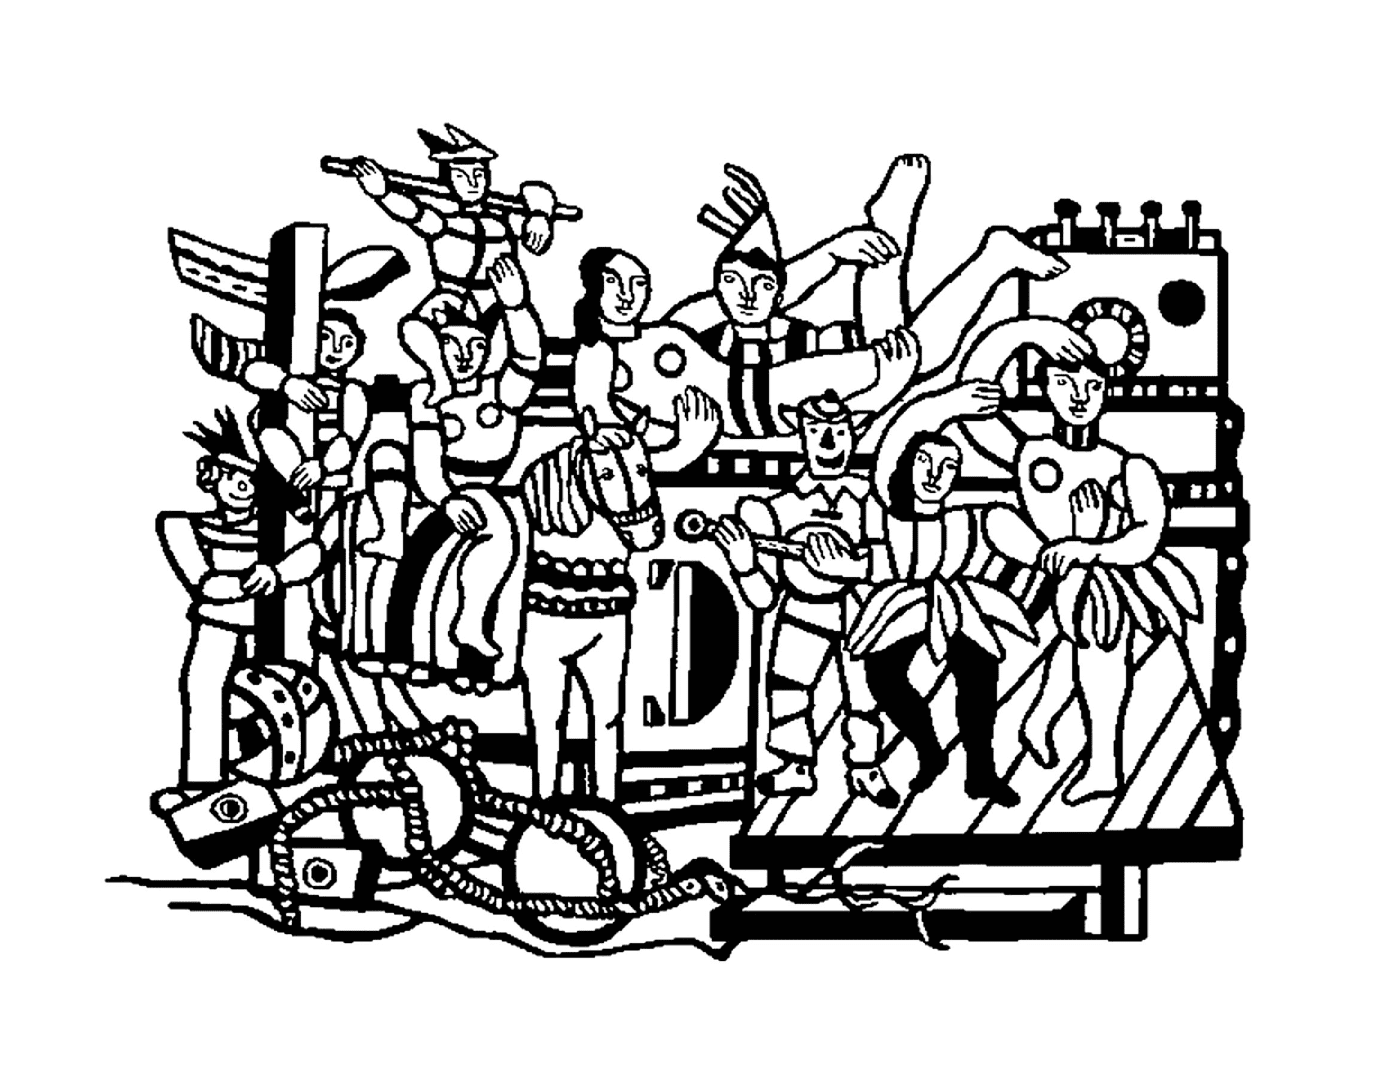  un gruppo di persone secondo La Grande Parade de Fernand Léger 